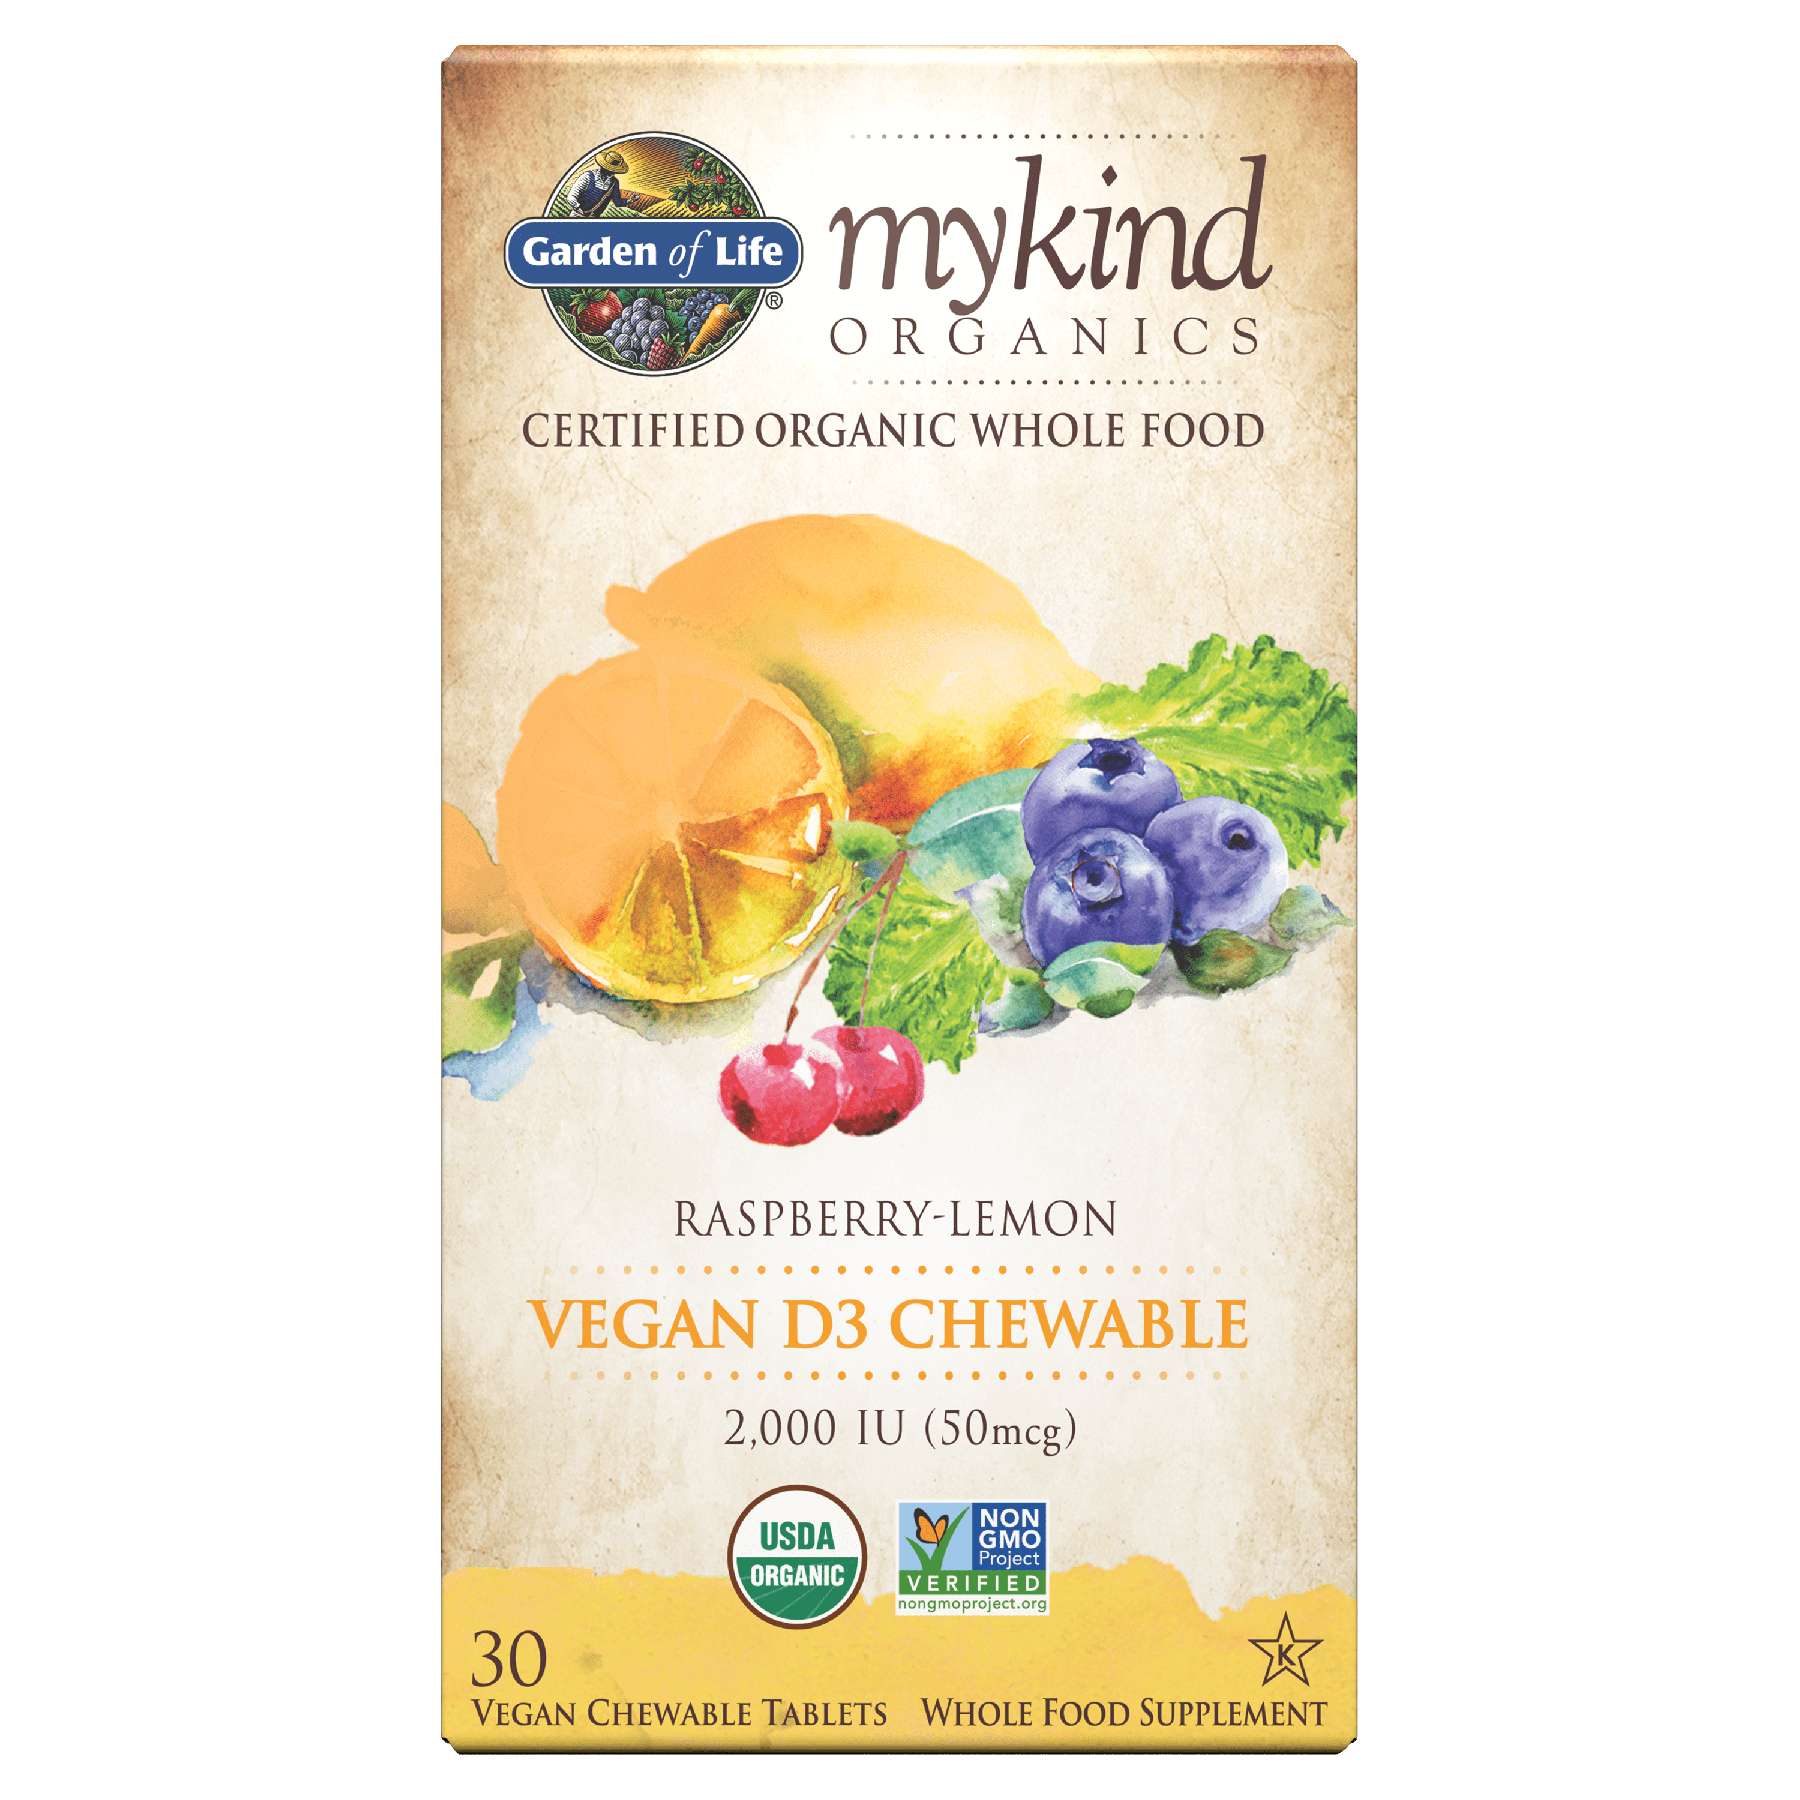 Mykind Organics Chewable Vegan D3 Raspberry Lemon 